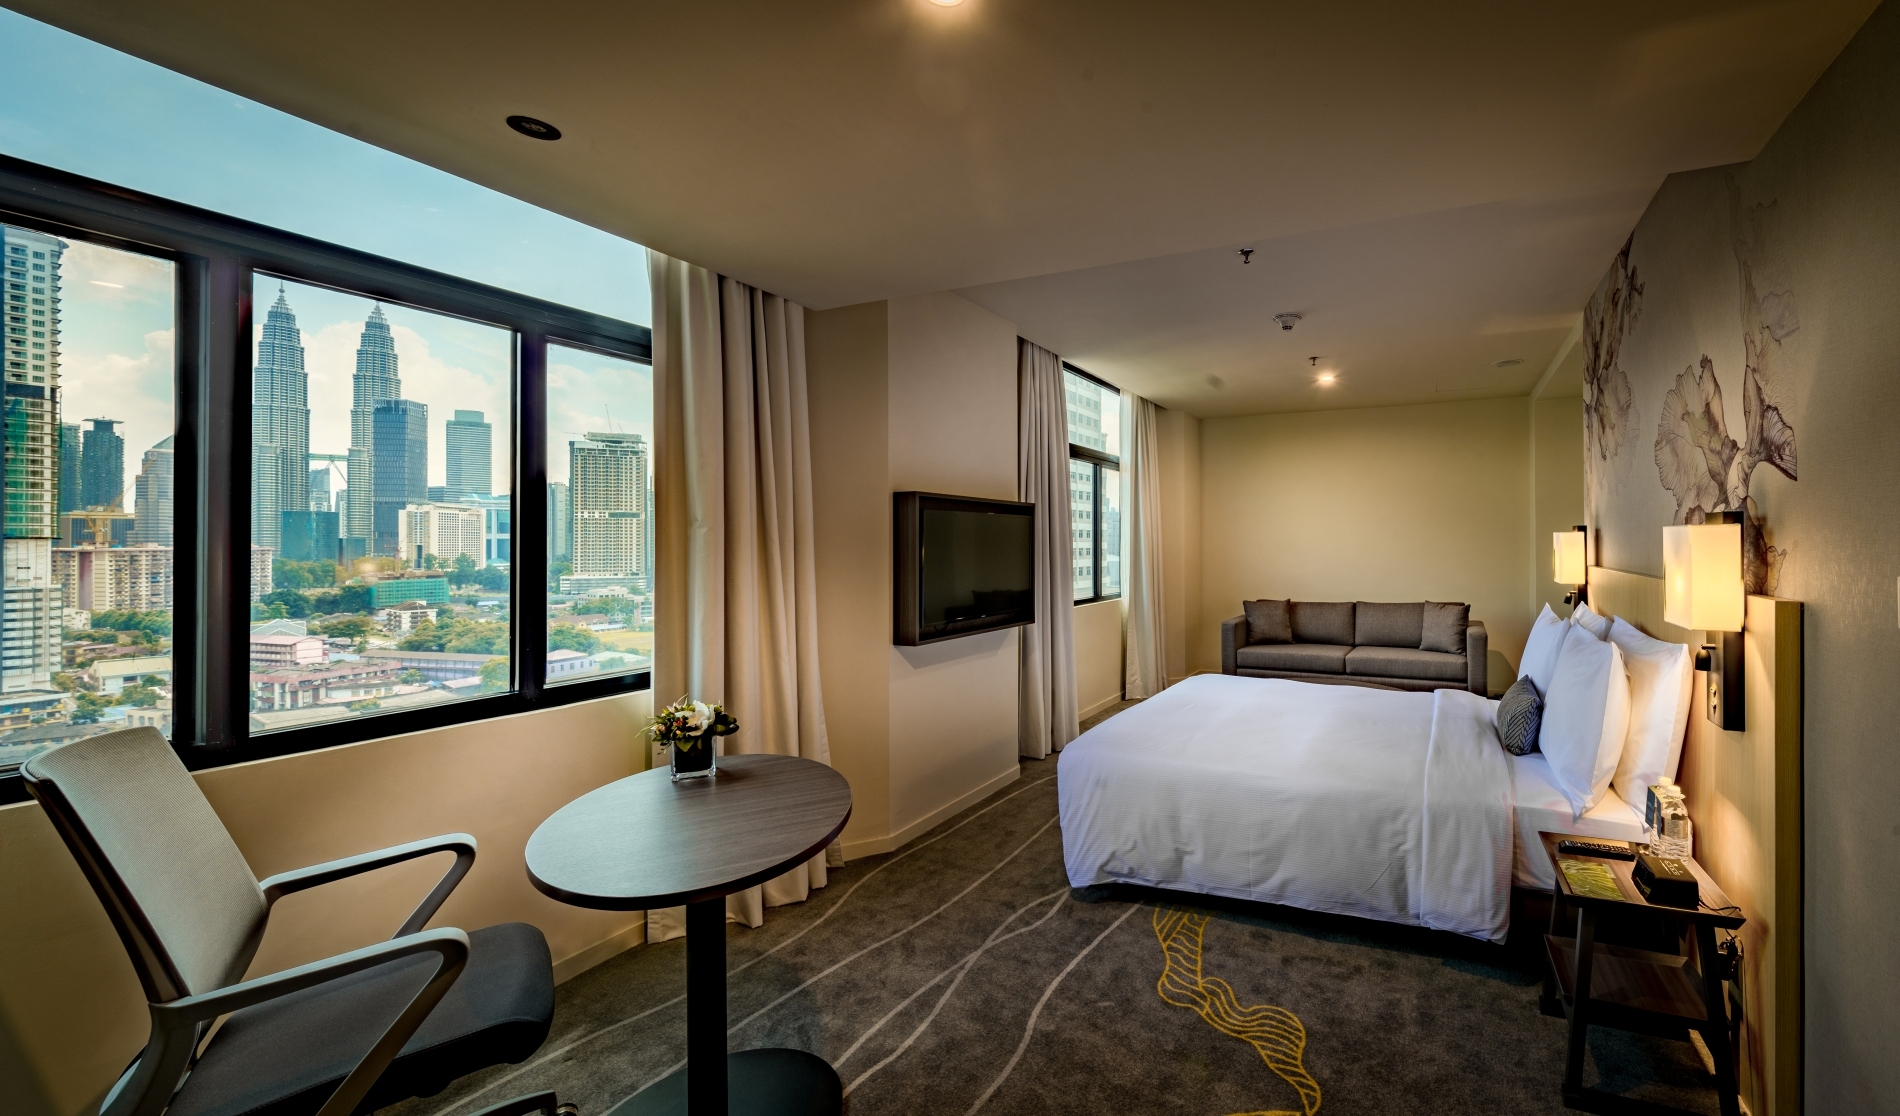 KULUMGI Queen Deluxe Room with KLCC View at Hilton Garden Inn Kuala Lumpur North